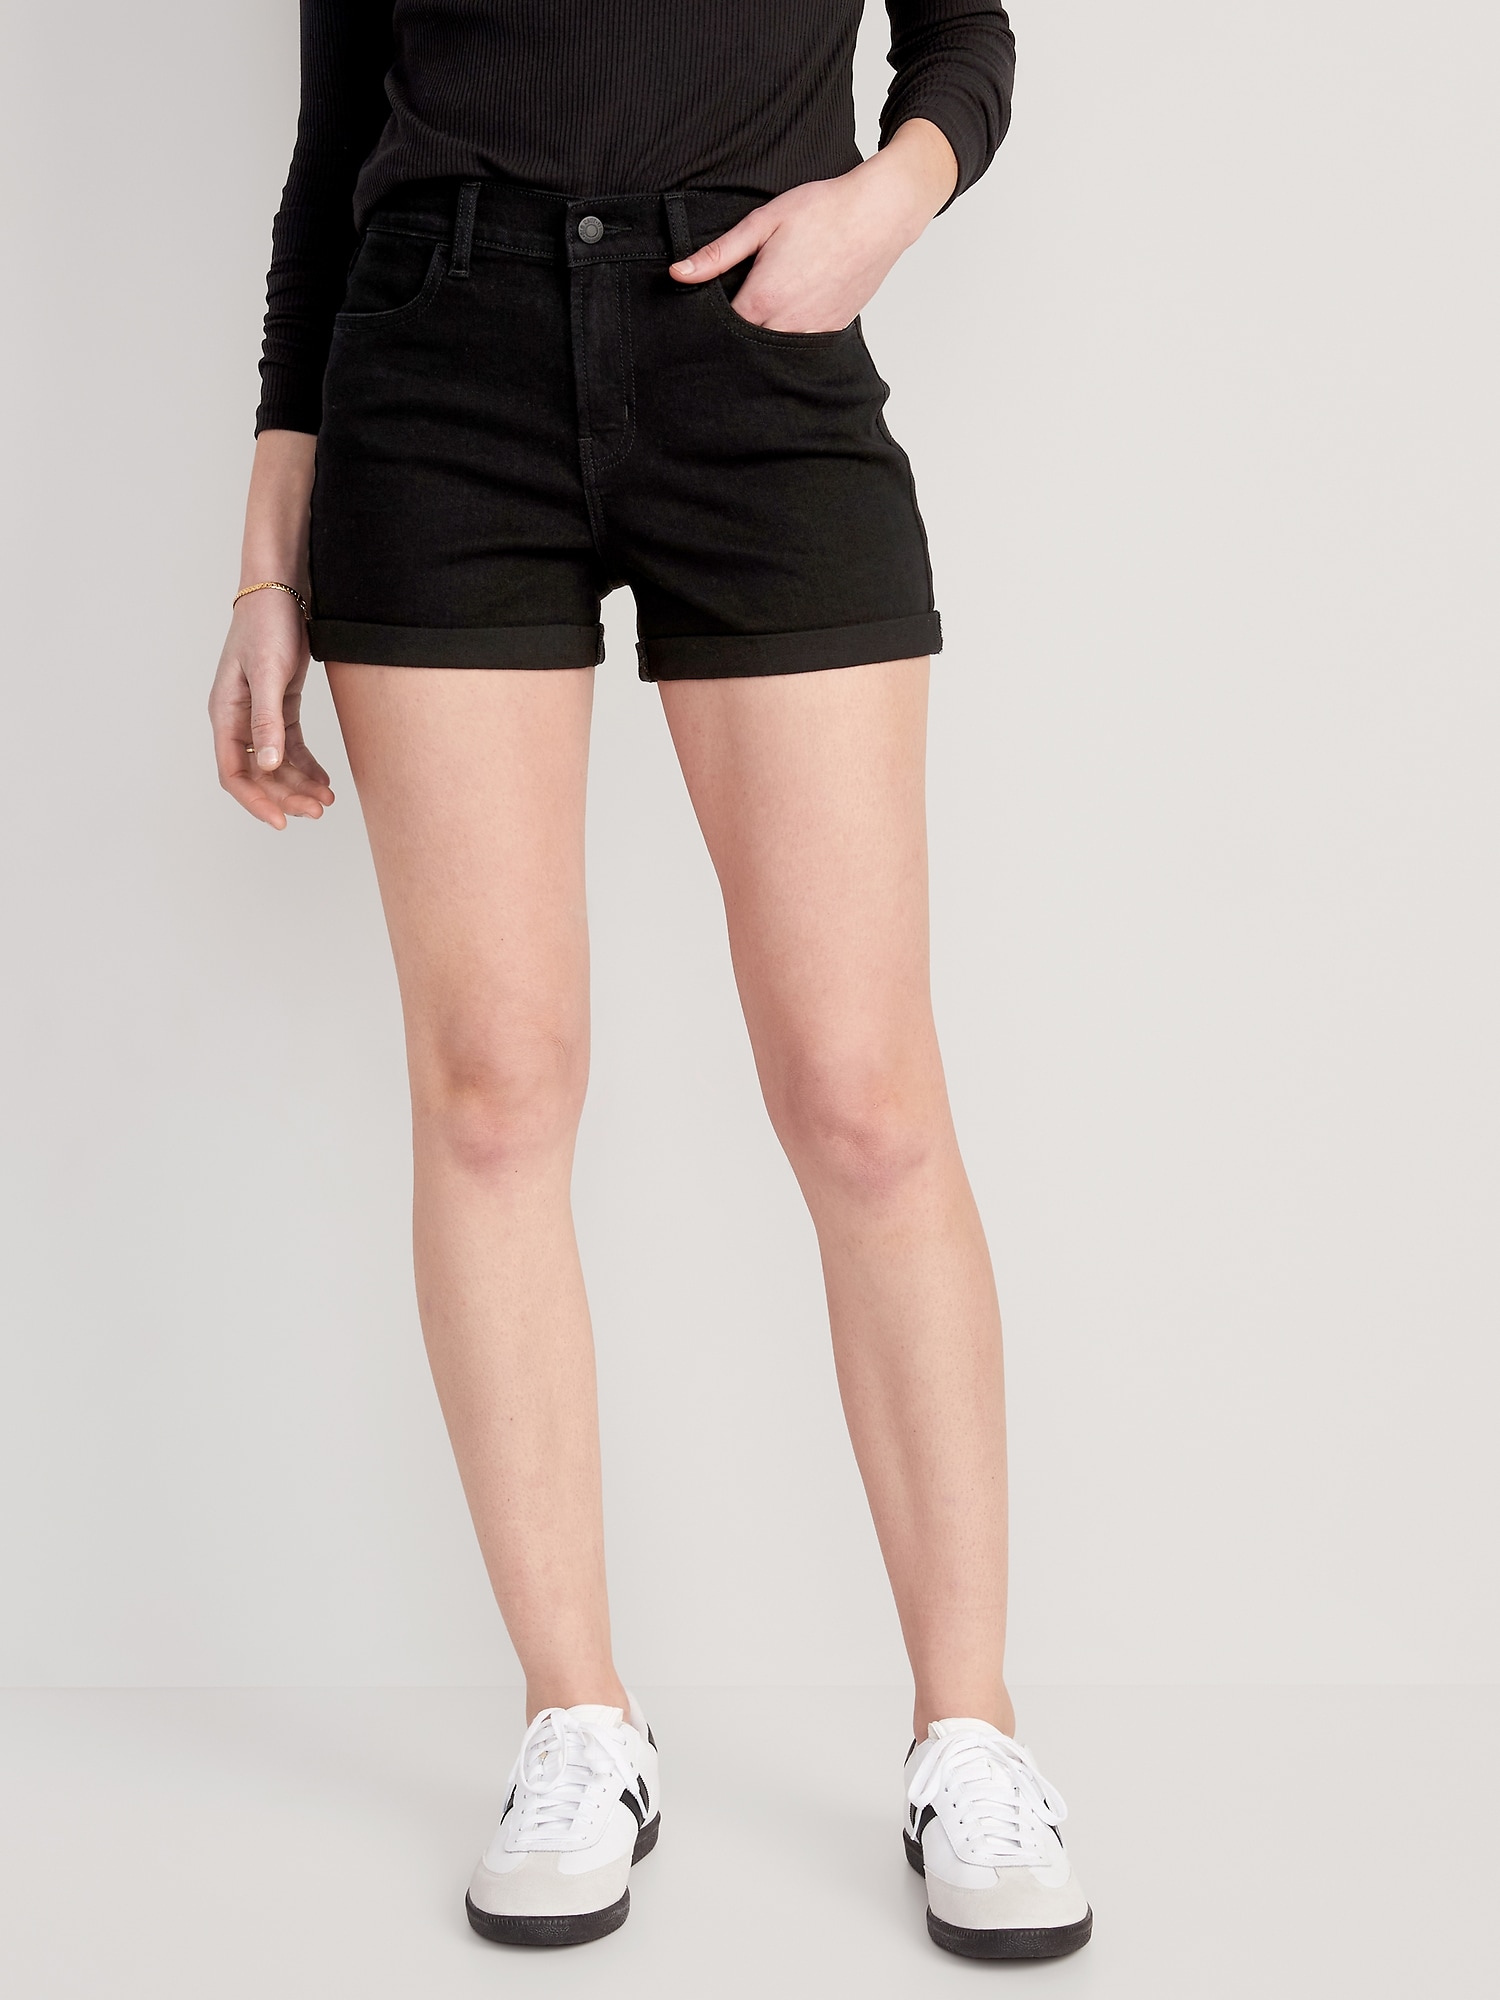 Buy Tiny Girl Black Solid Denim Shorts for Girls Clothing Online @ Tata CLiQ